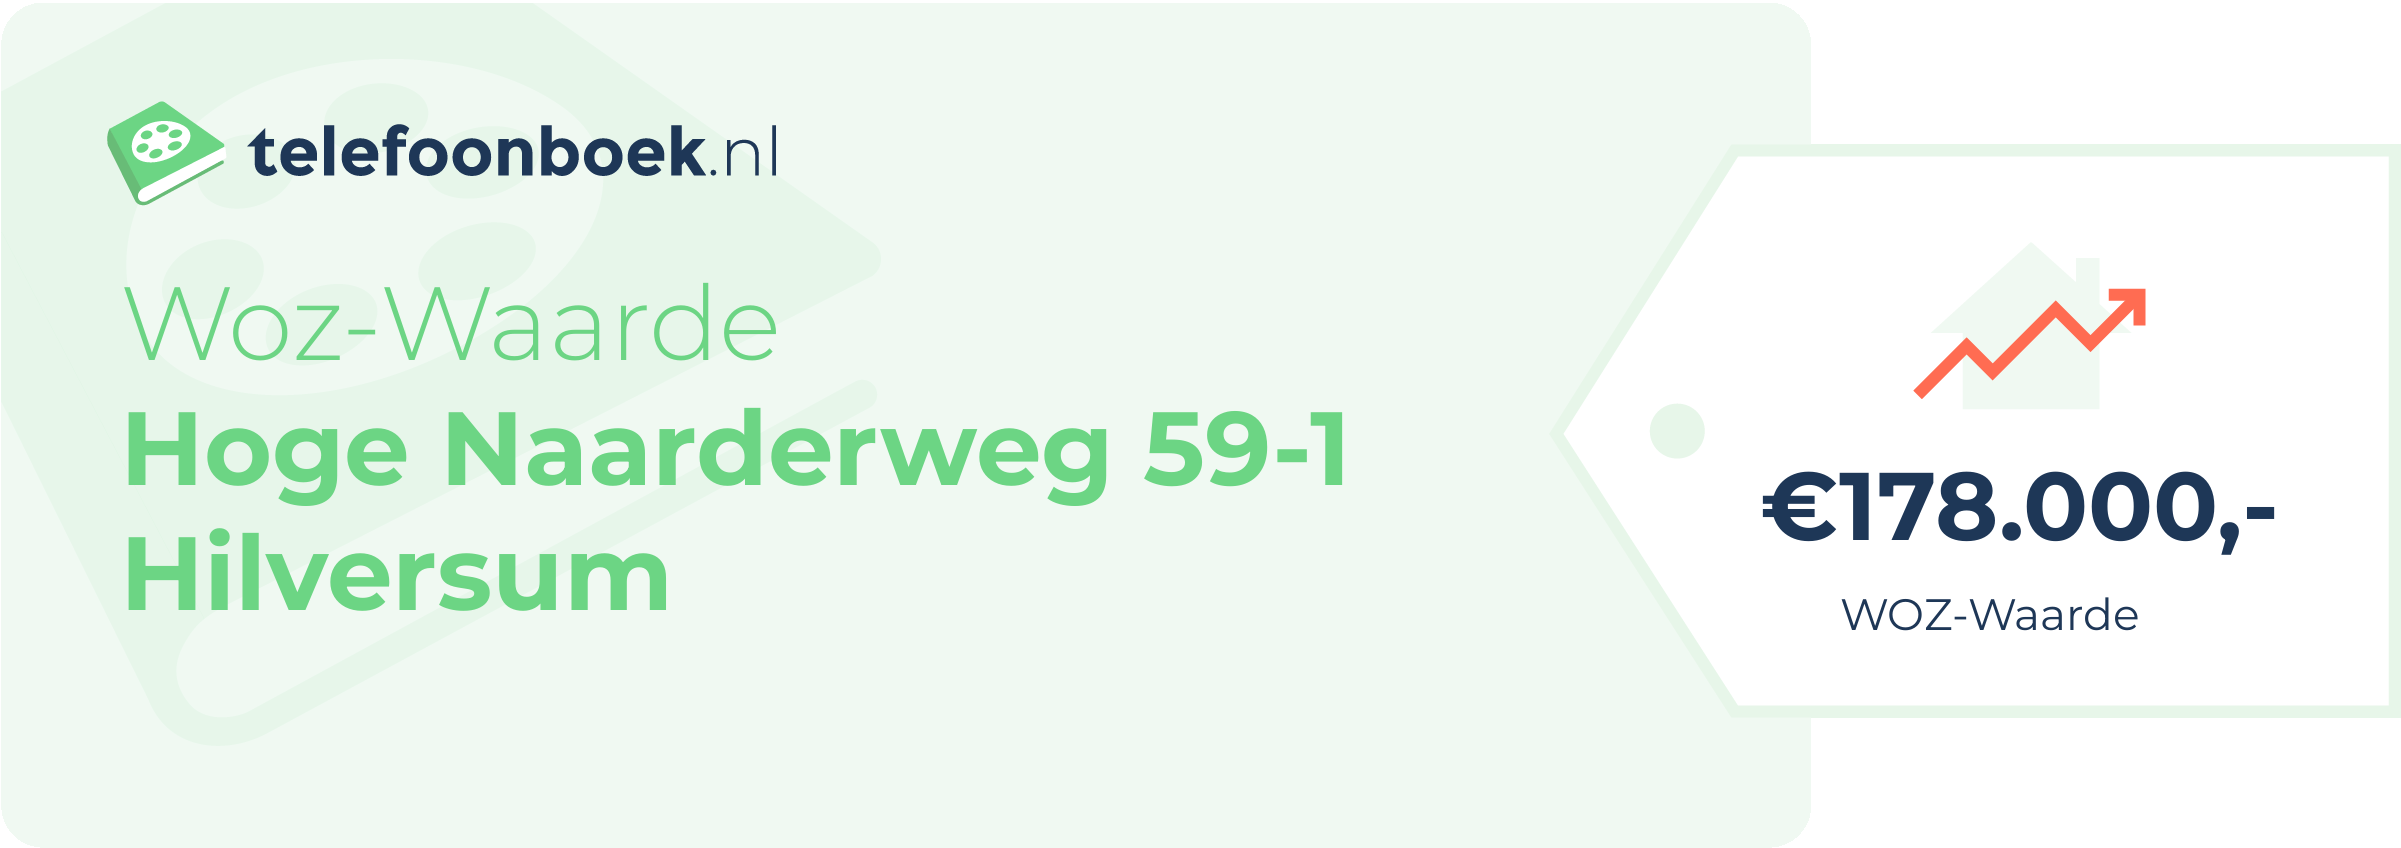 WOZ-waarde Hoge Naarderweg 59-1 Hilversum